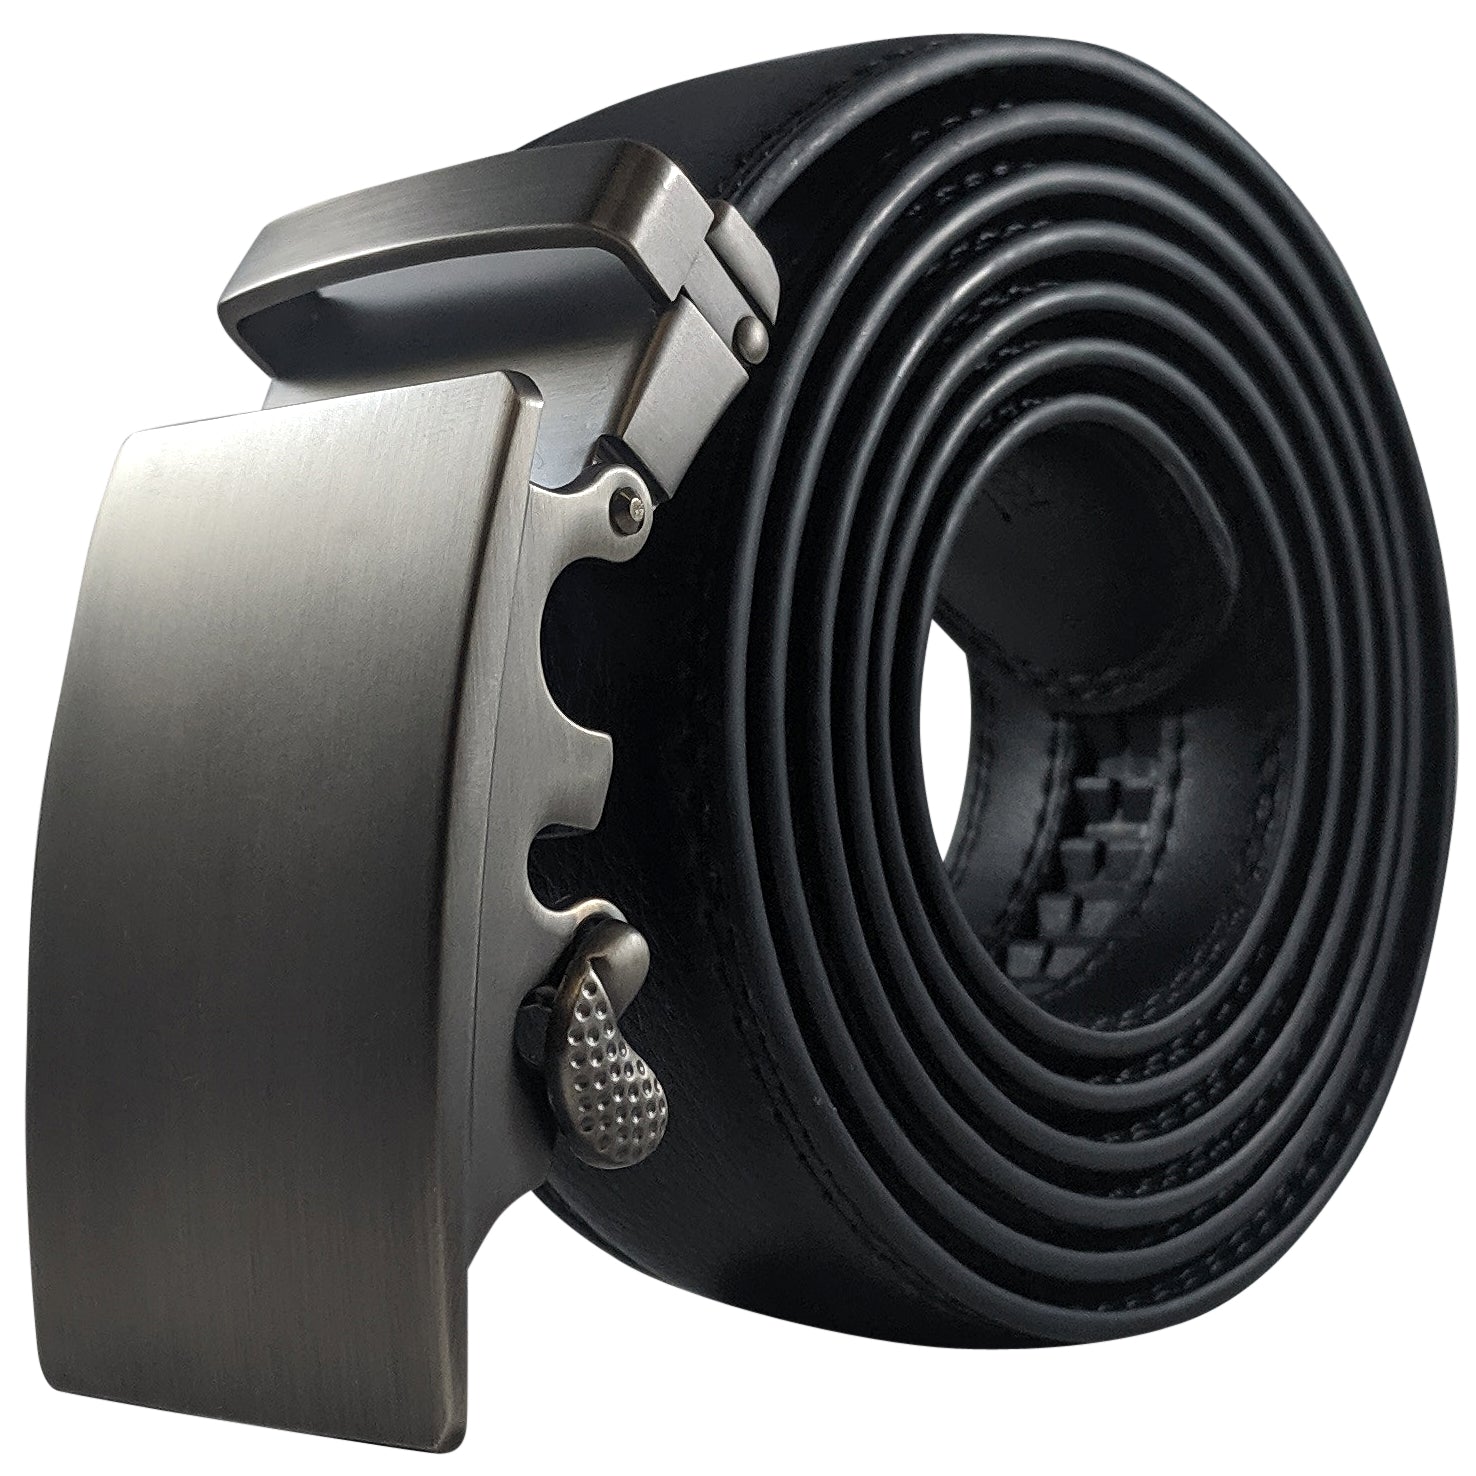 Celebrity Mens Black Leather Ratchet Belt Automatic Strap Buckle Waistband  Waist V8K3